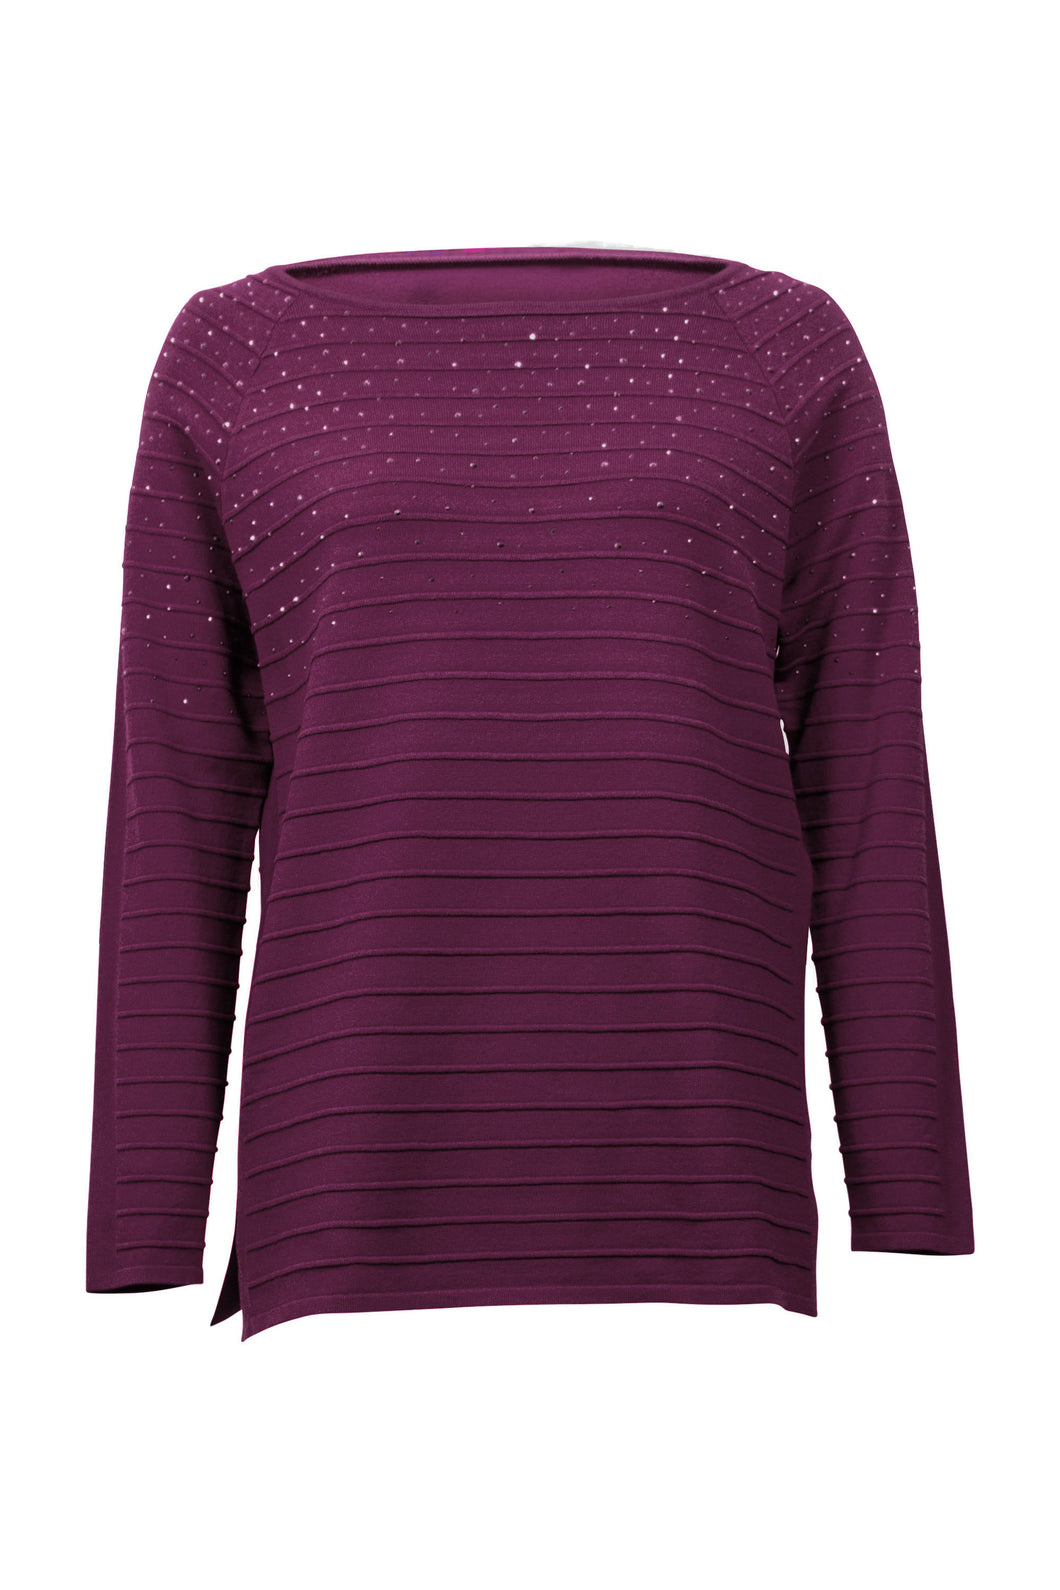 Joseph Ribkoff Long Sleeve Sweater with Sparkle Neckline in Vineyard Or Midnight Blue